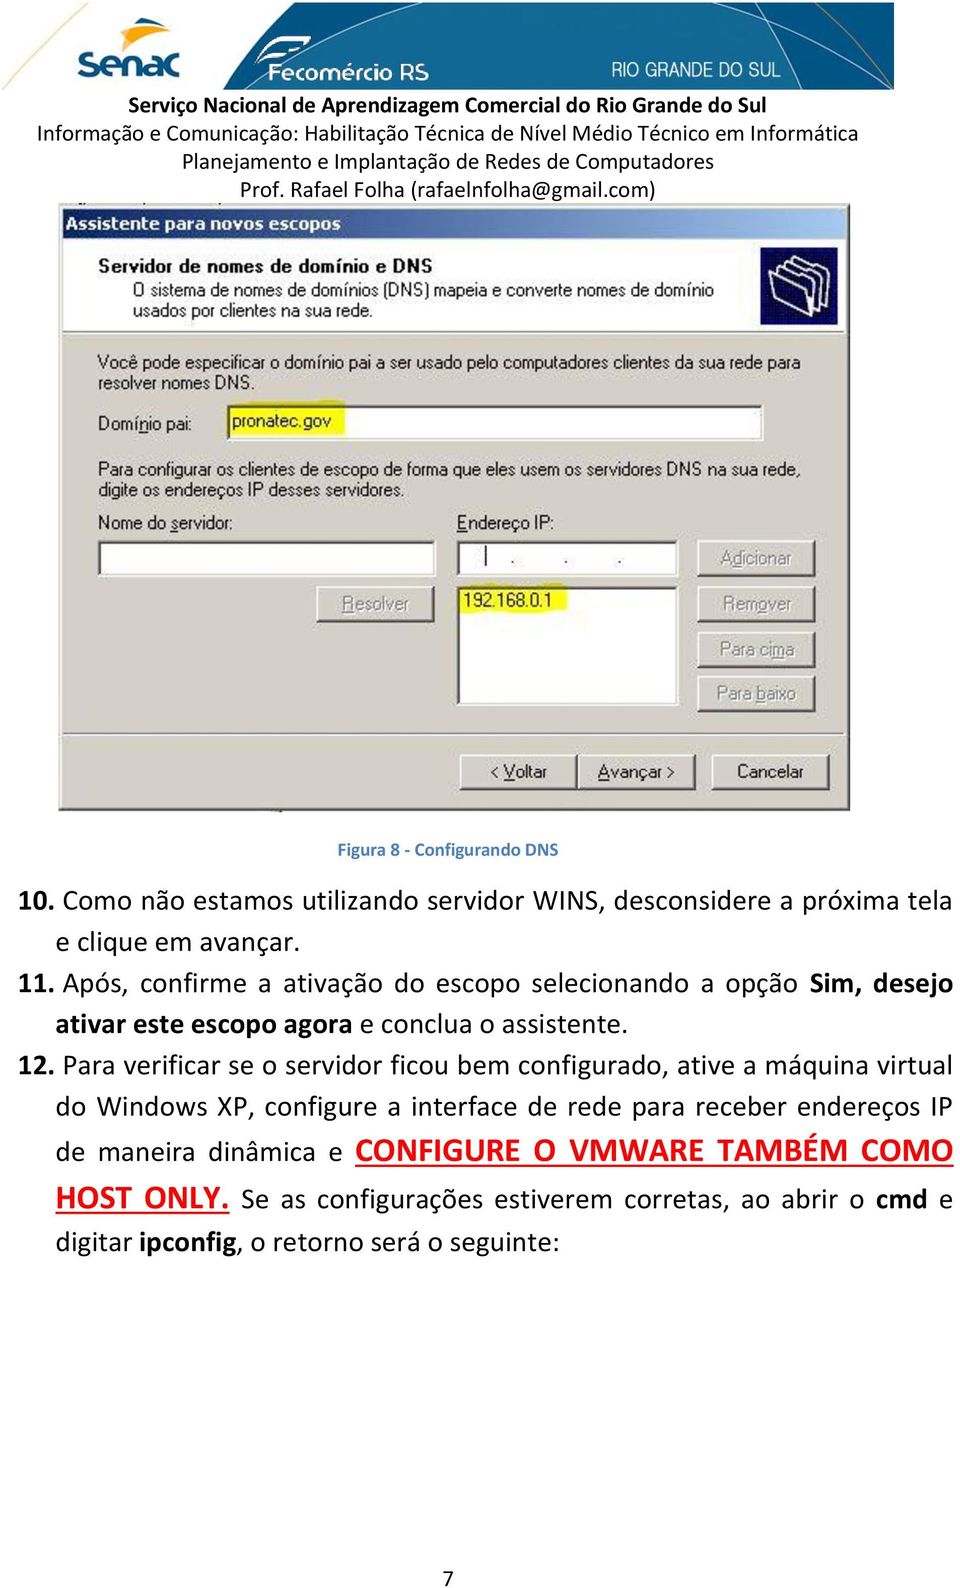 Para verificar se o servidor ficou bem configurado, ative a máquina virtual do Windows XP, configure a interface de rede para receber